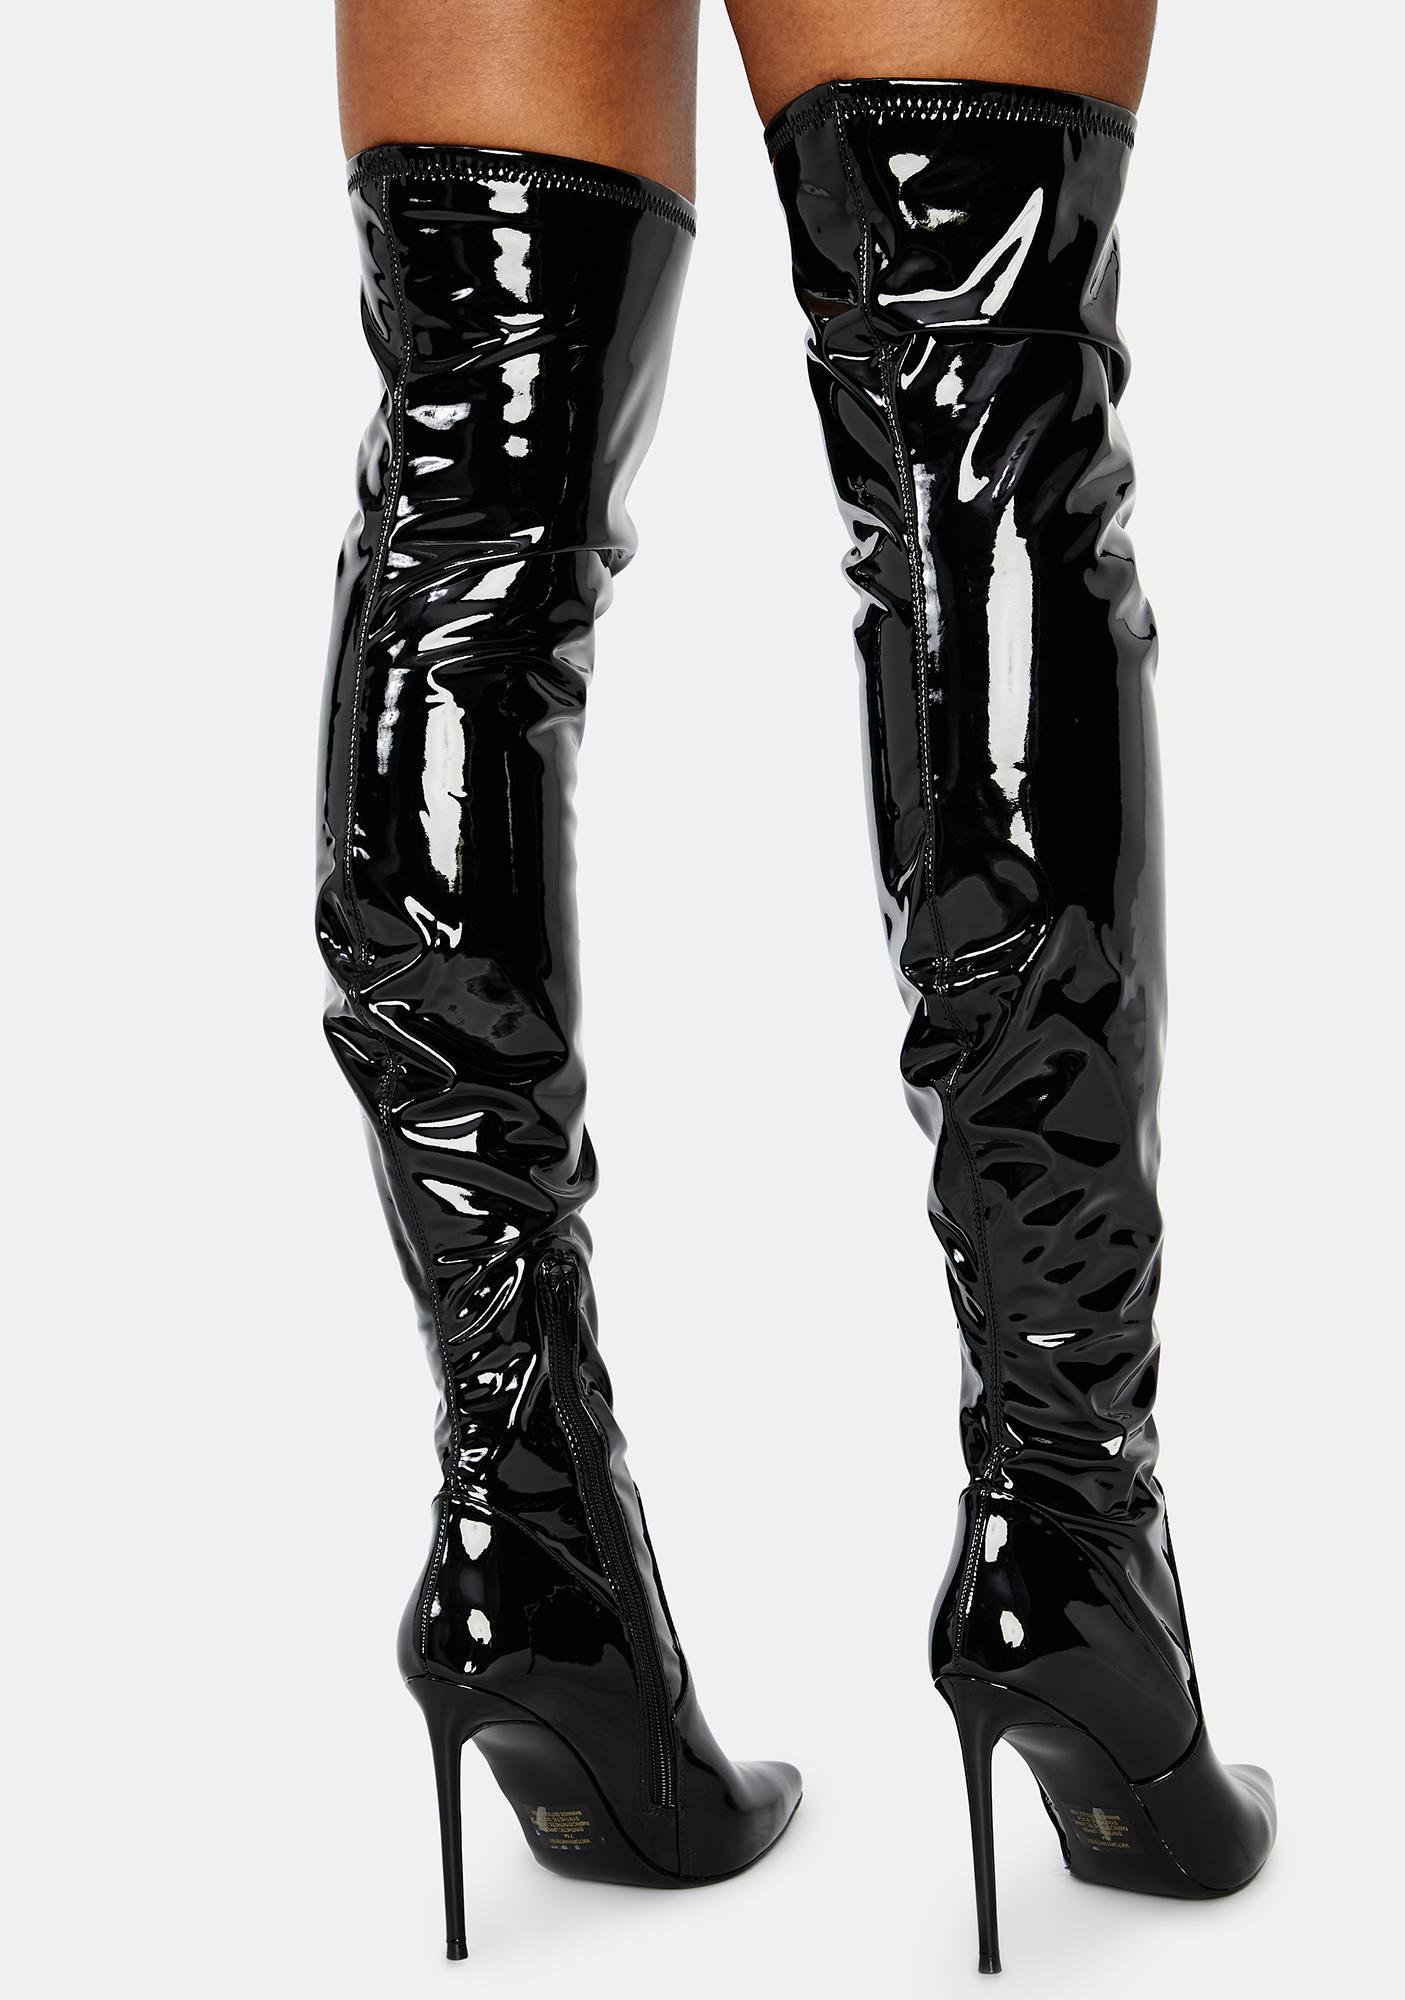 Steve Madden Patent Viktory Knee High Boots | Dolls Kill